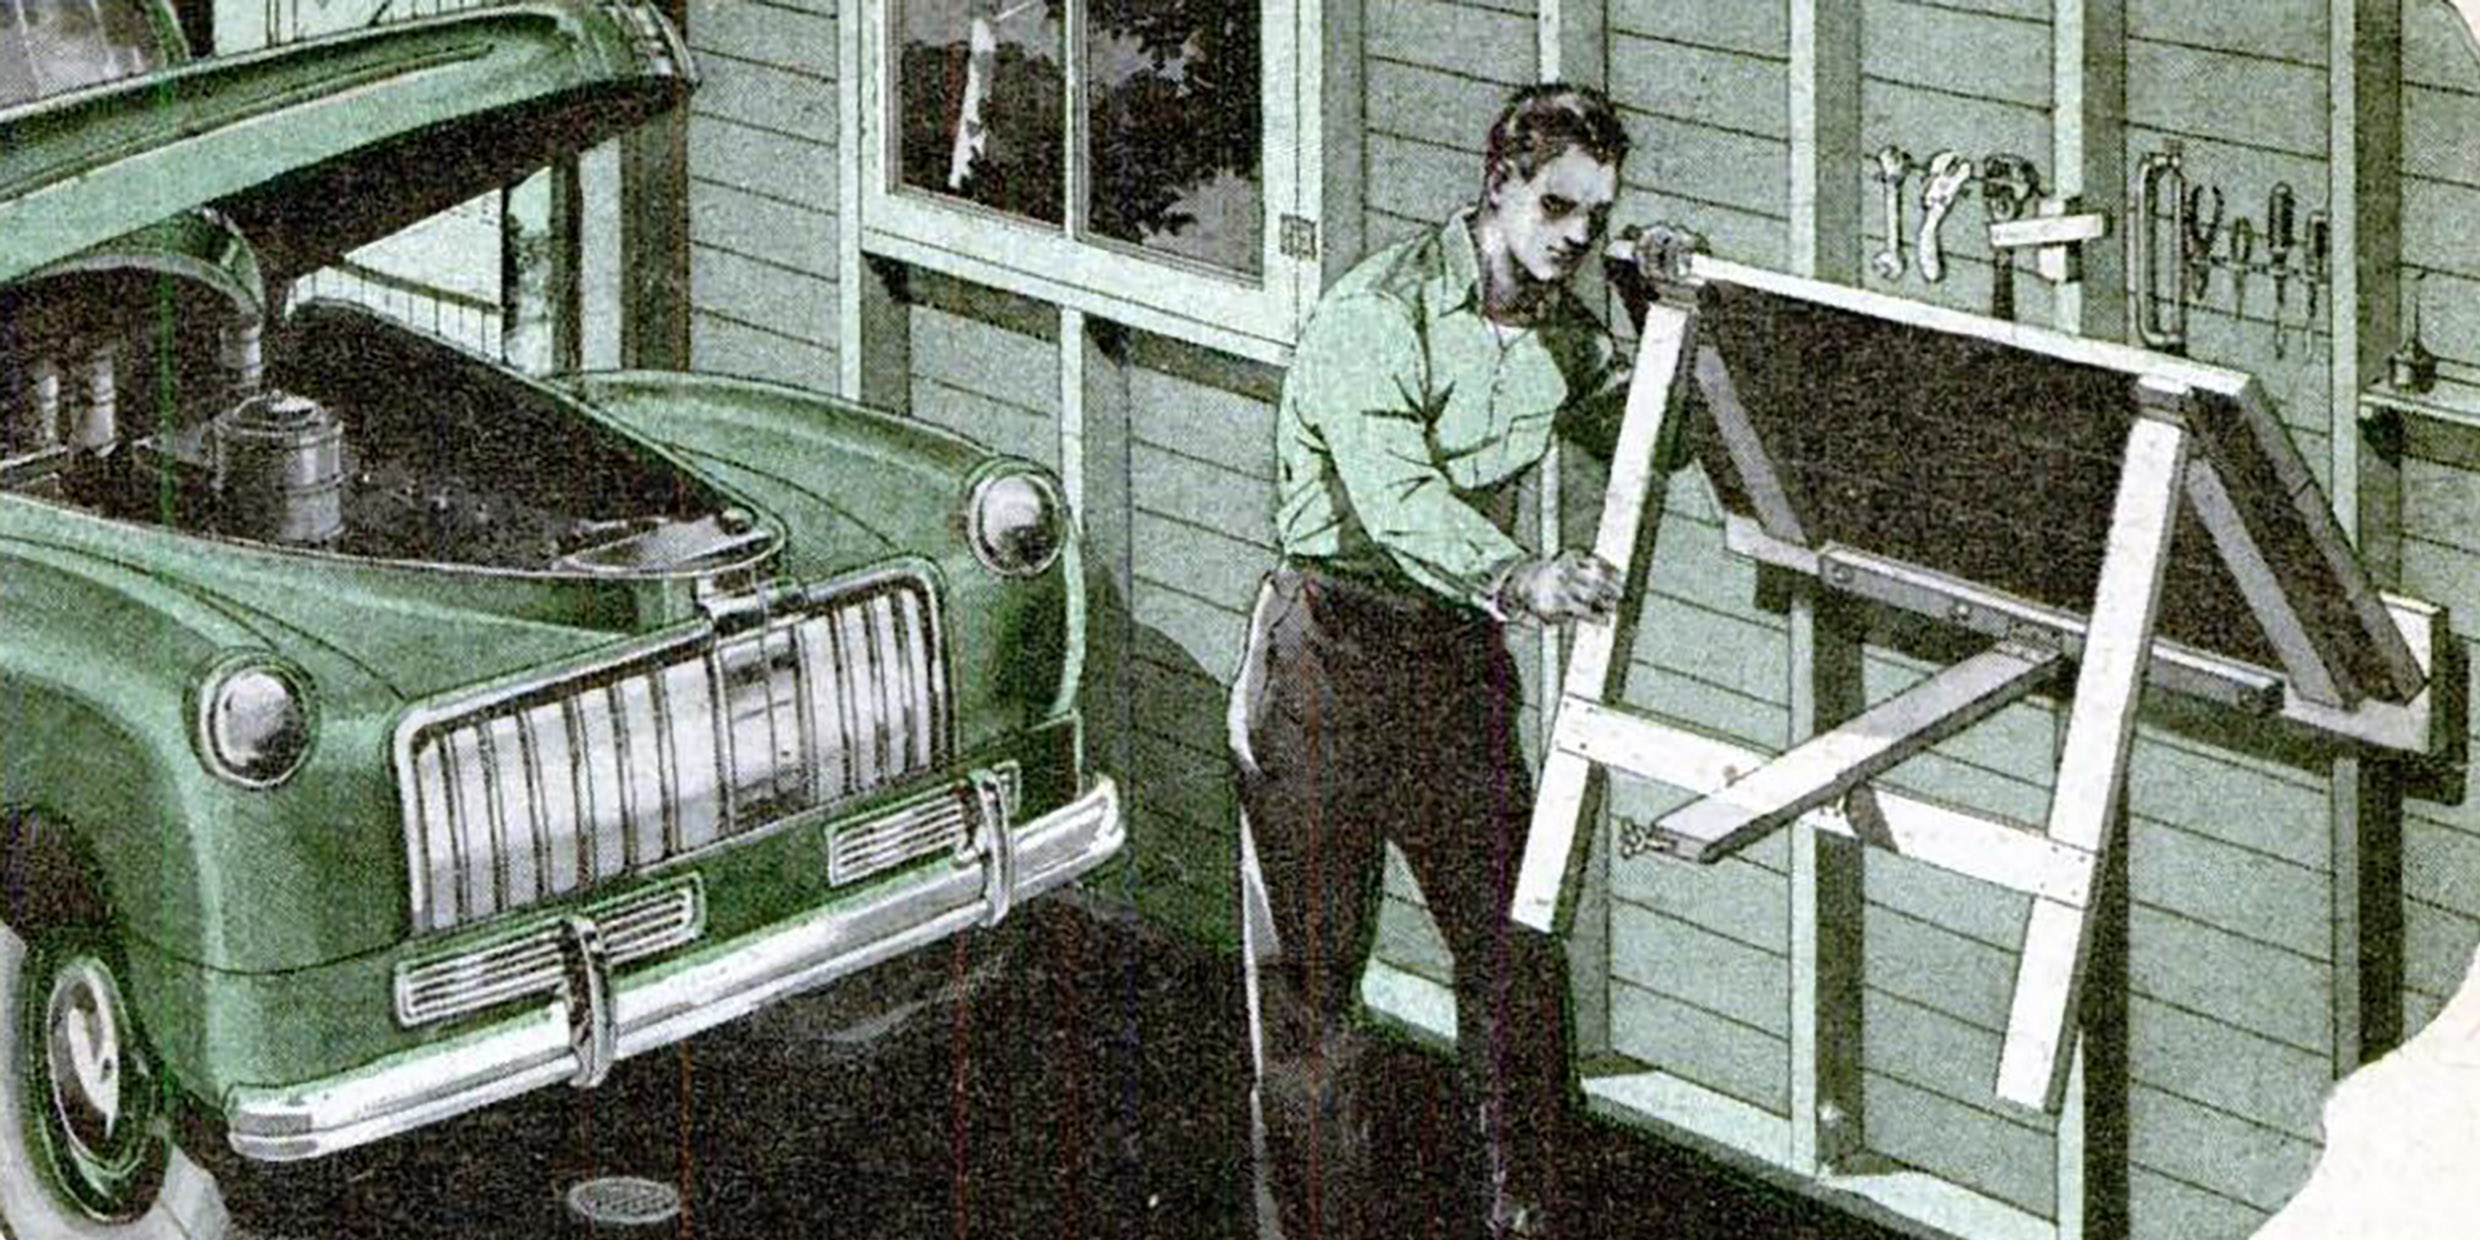 Classic illustration of handyman in his garage